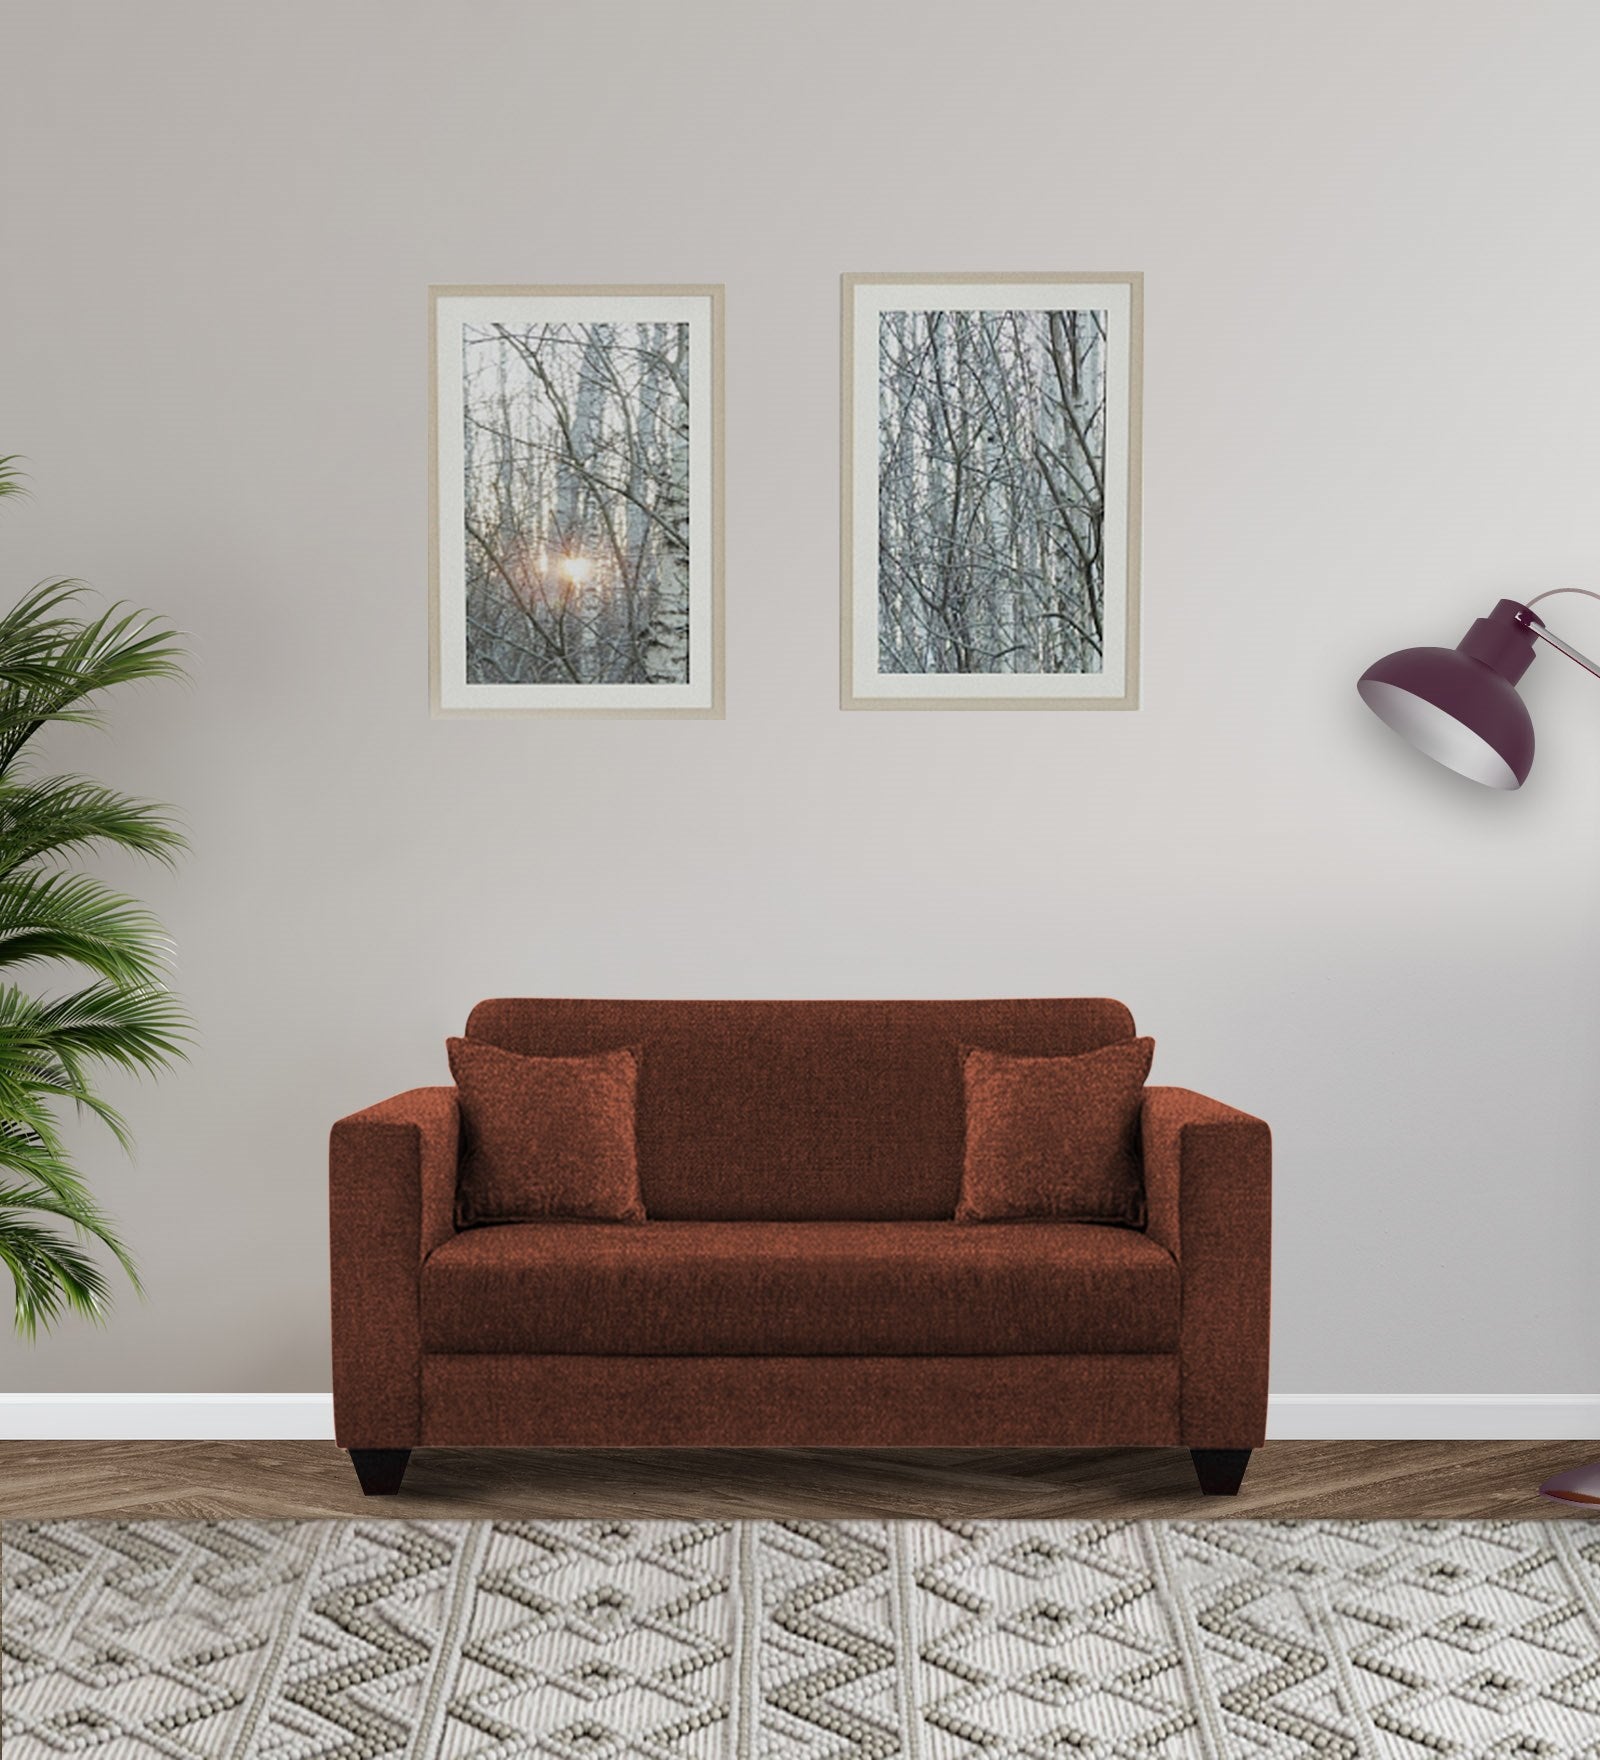 Nebula Fabric 2 Seater Sofa in Coffee Brown Colour